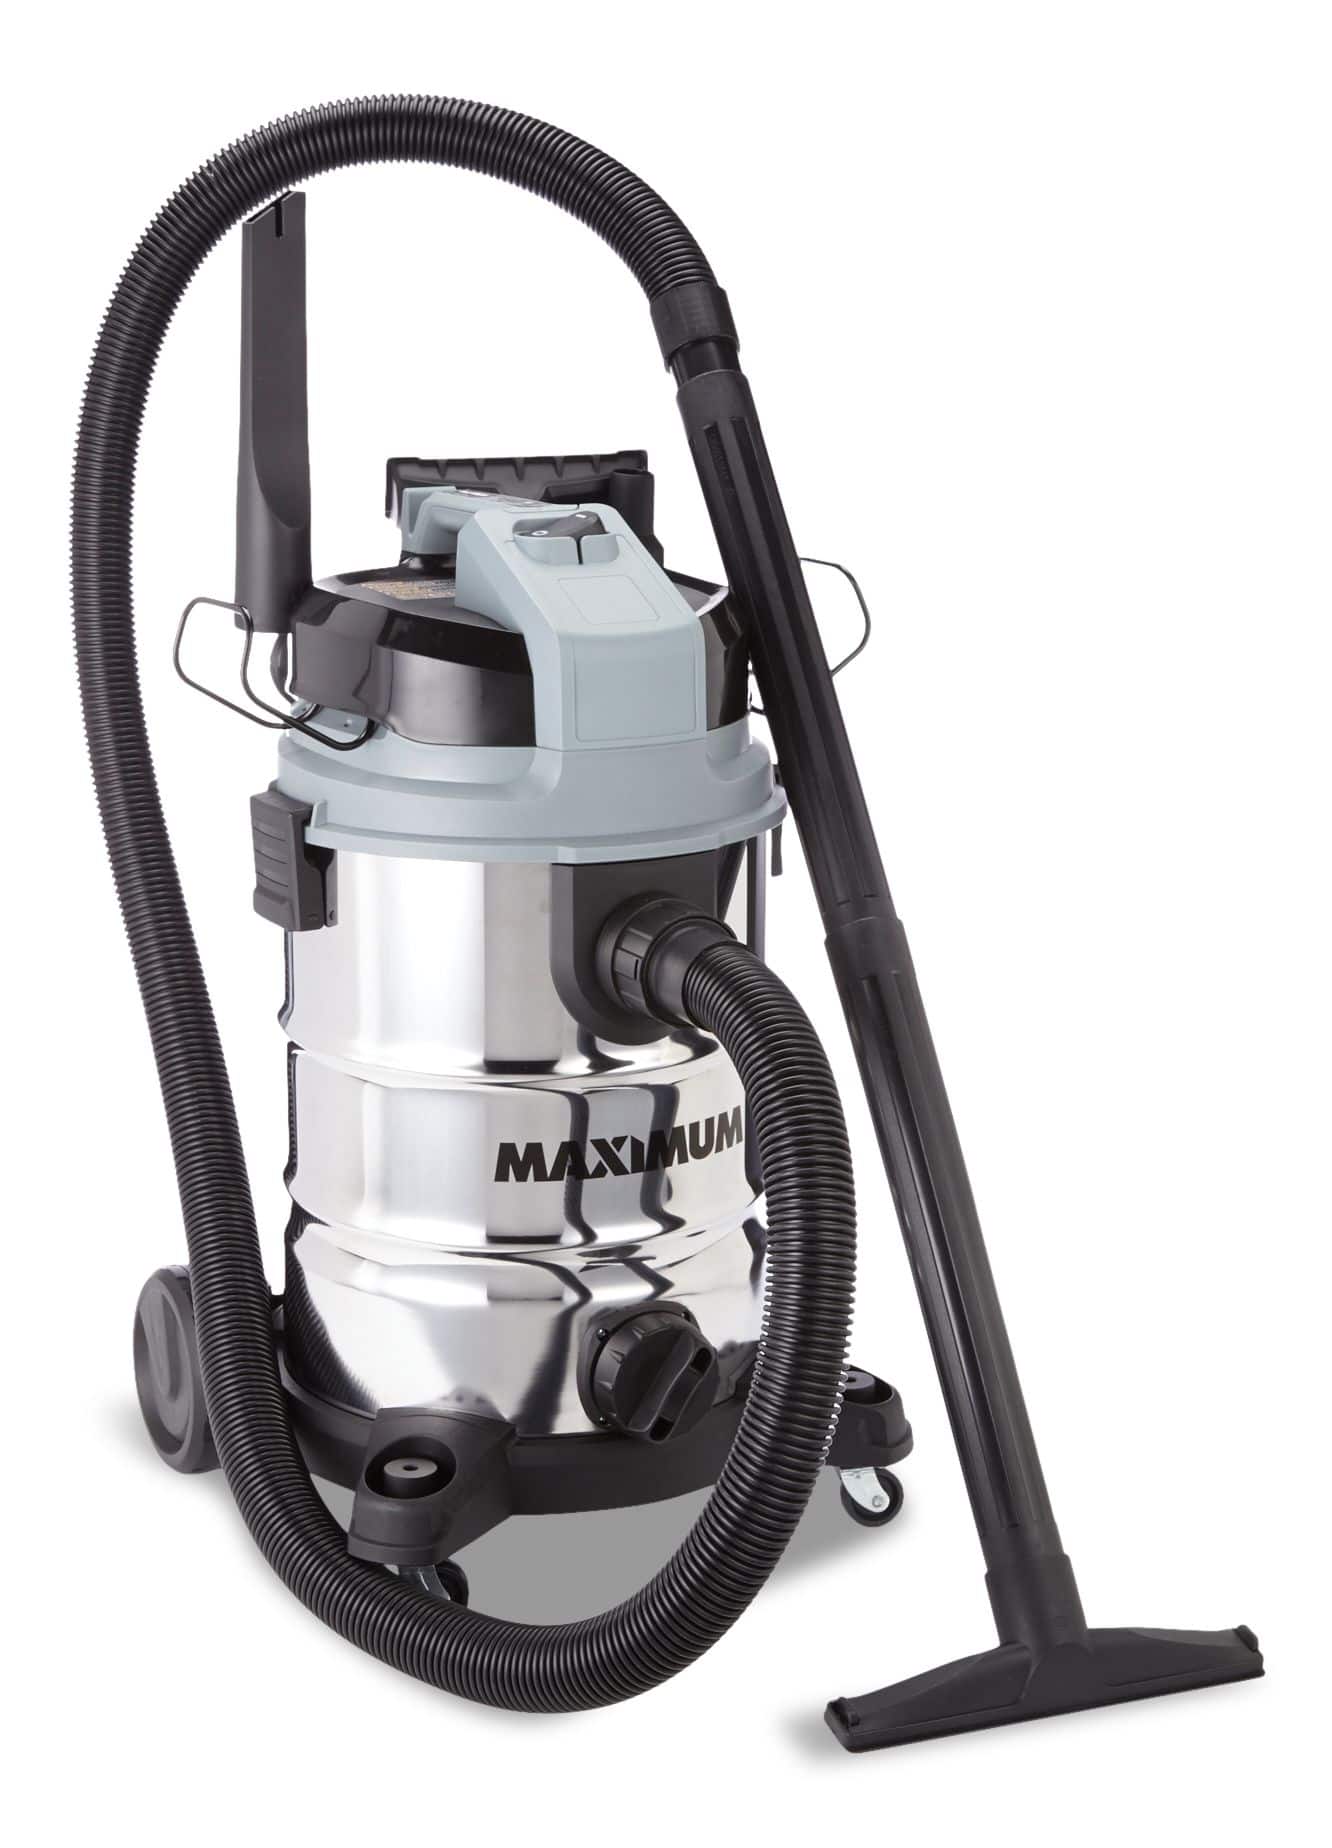 MAXIMUM VKD811SW 5.5 Peak HP Stainless Steel Wet/Dry Shop Vacuum with ...